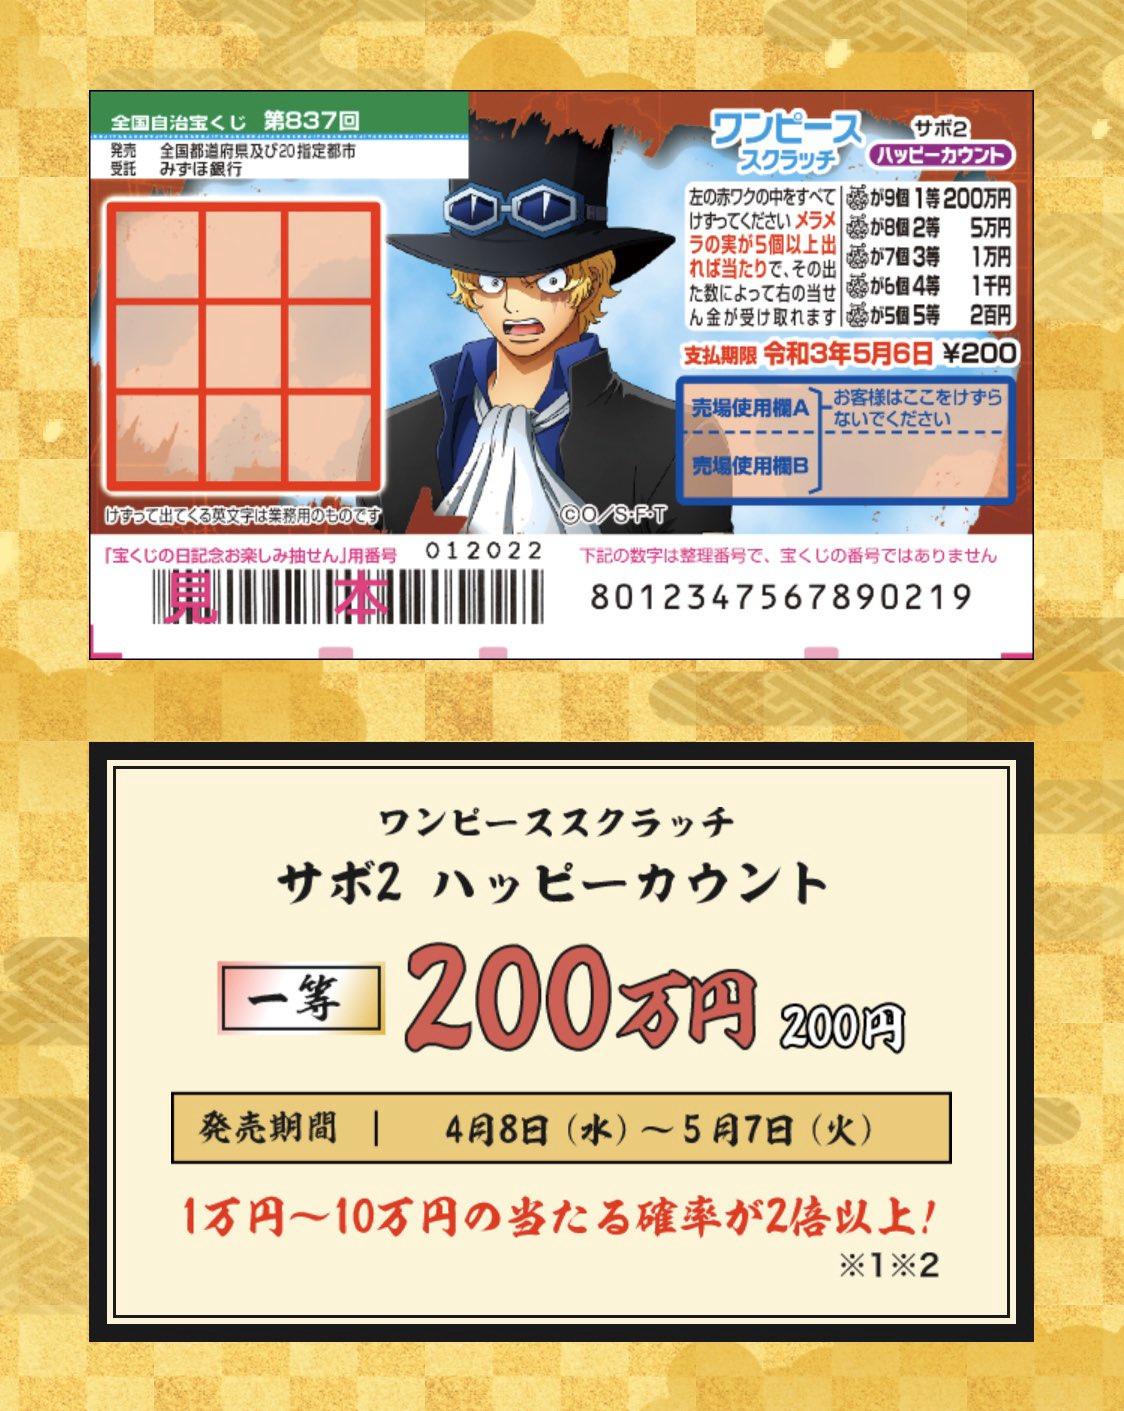 Kei One Piece垢 今日から発売のワンピーススクラッチはサボ 1等は0万円 今なら1万円 10万円の当たる確率が2倍以上 T Co Ckb2ir0jwl 宝くじ ワンピーススクラッチ